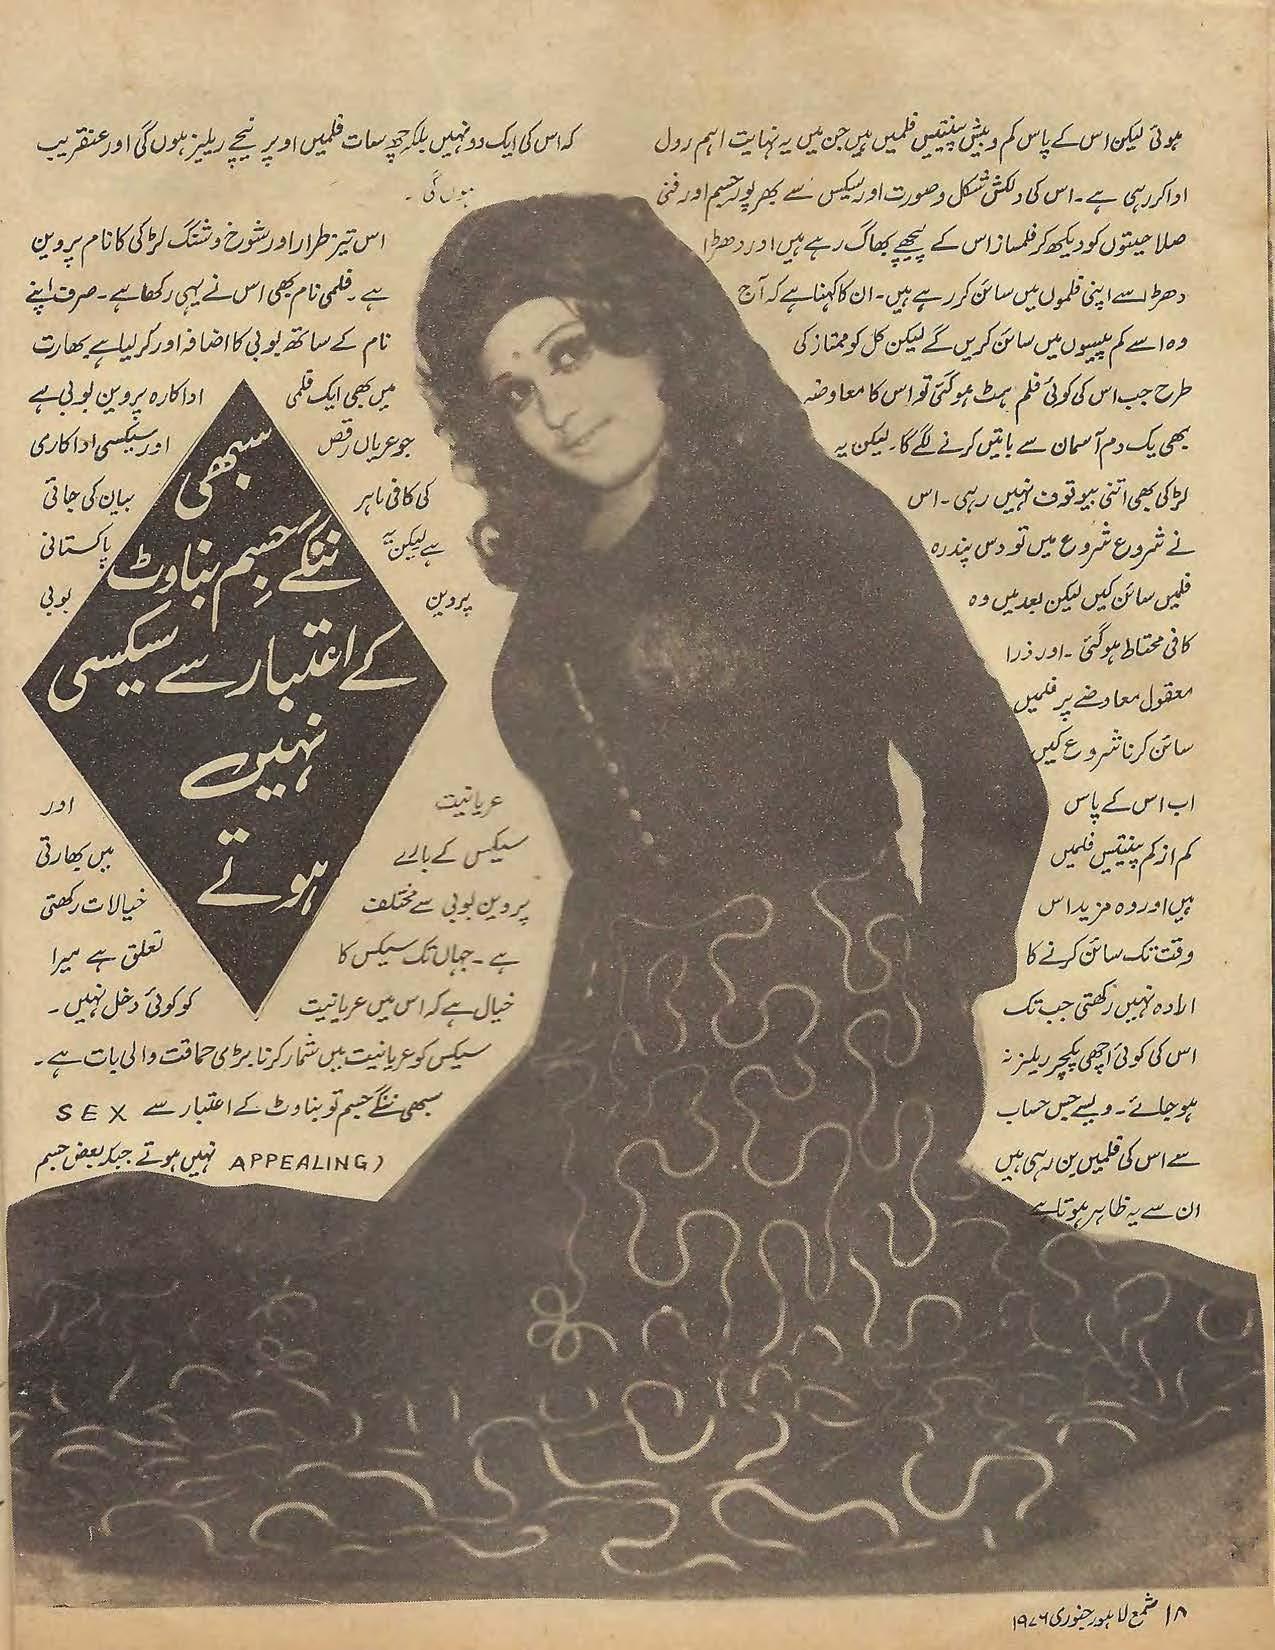 Shama (Jan, 1976) - KHAJISTAN™